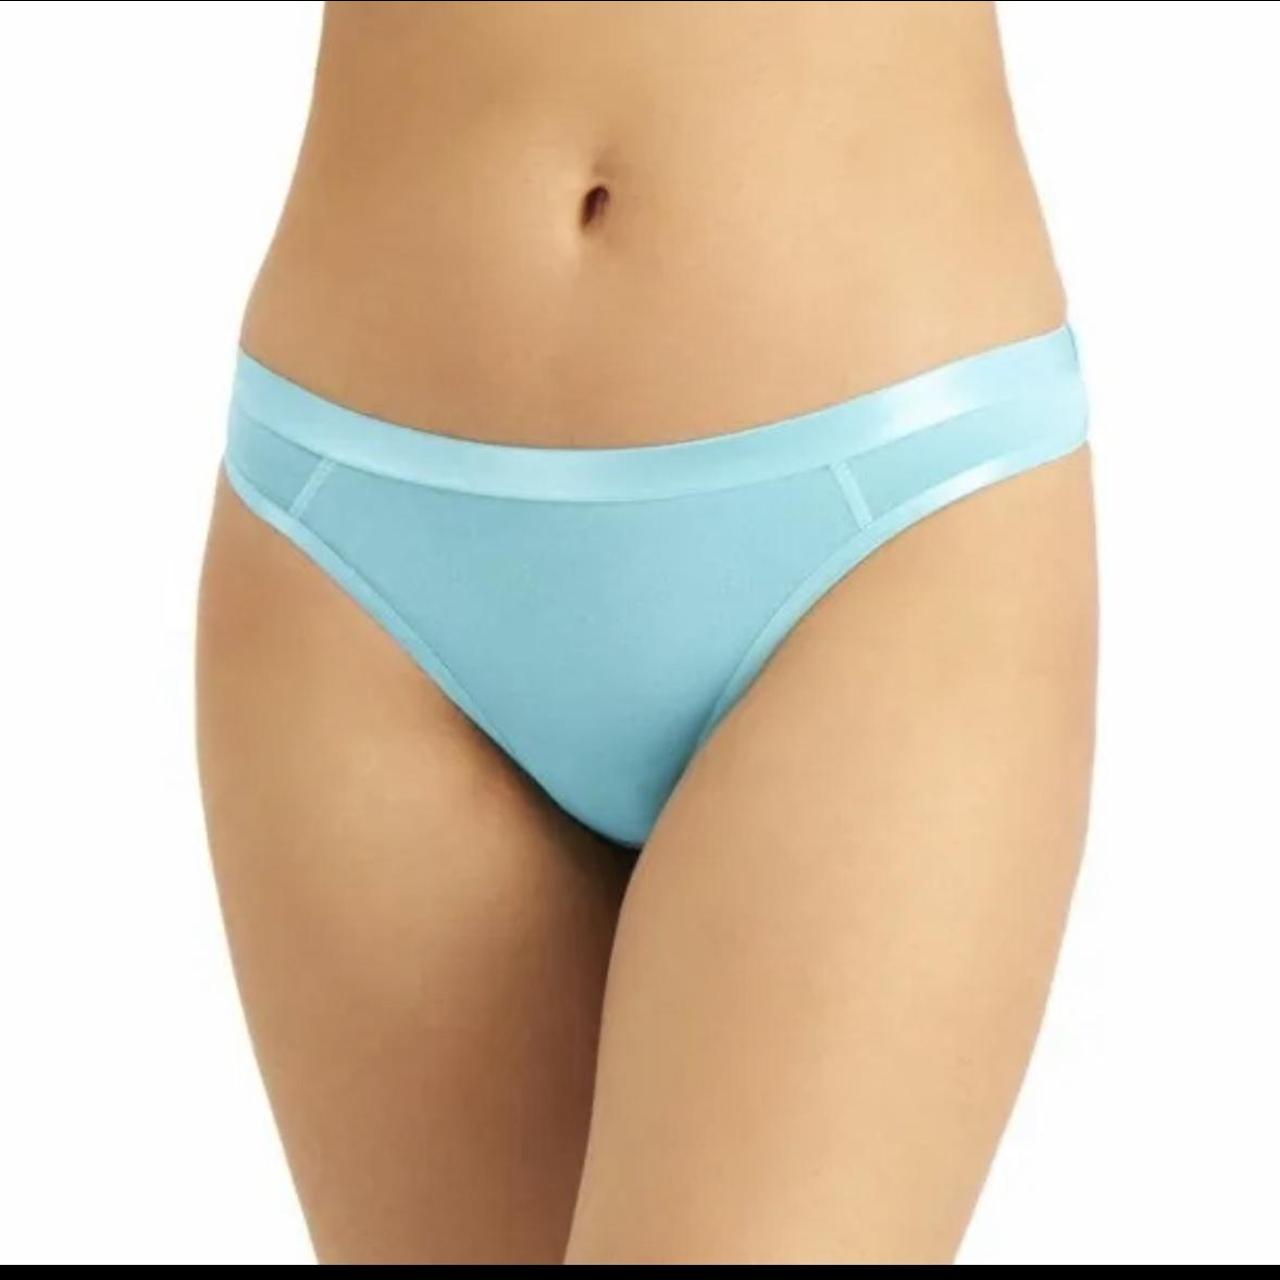 Jenni Intimates Thong Underwear Style: - Depop